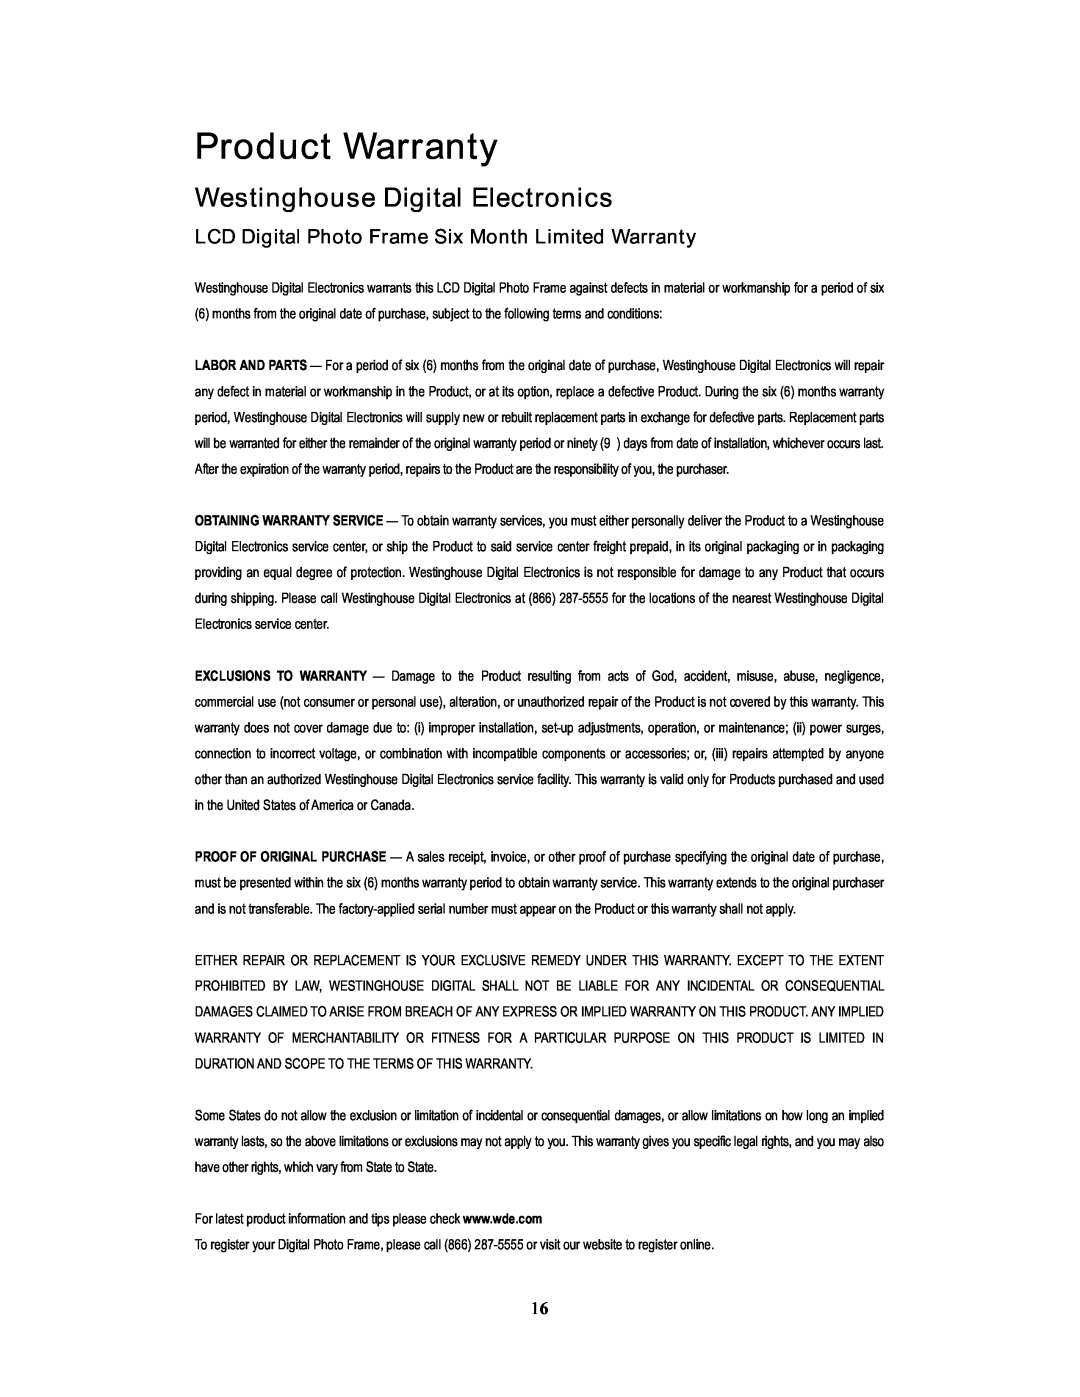 Westinghouse DPF-1021 user manual Product Warranty, Westinghouse Digital Electronics 